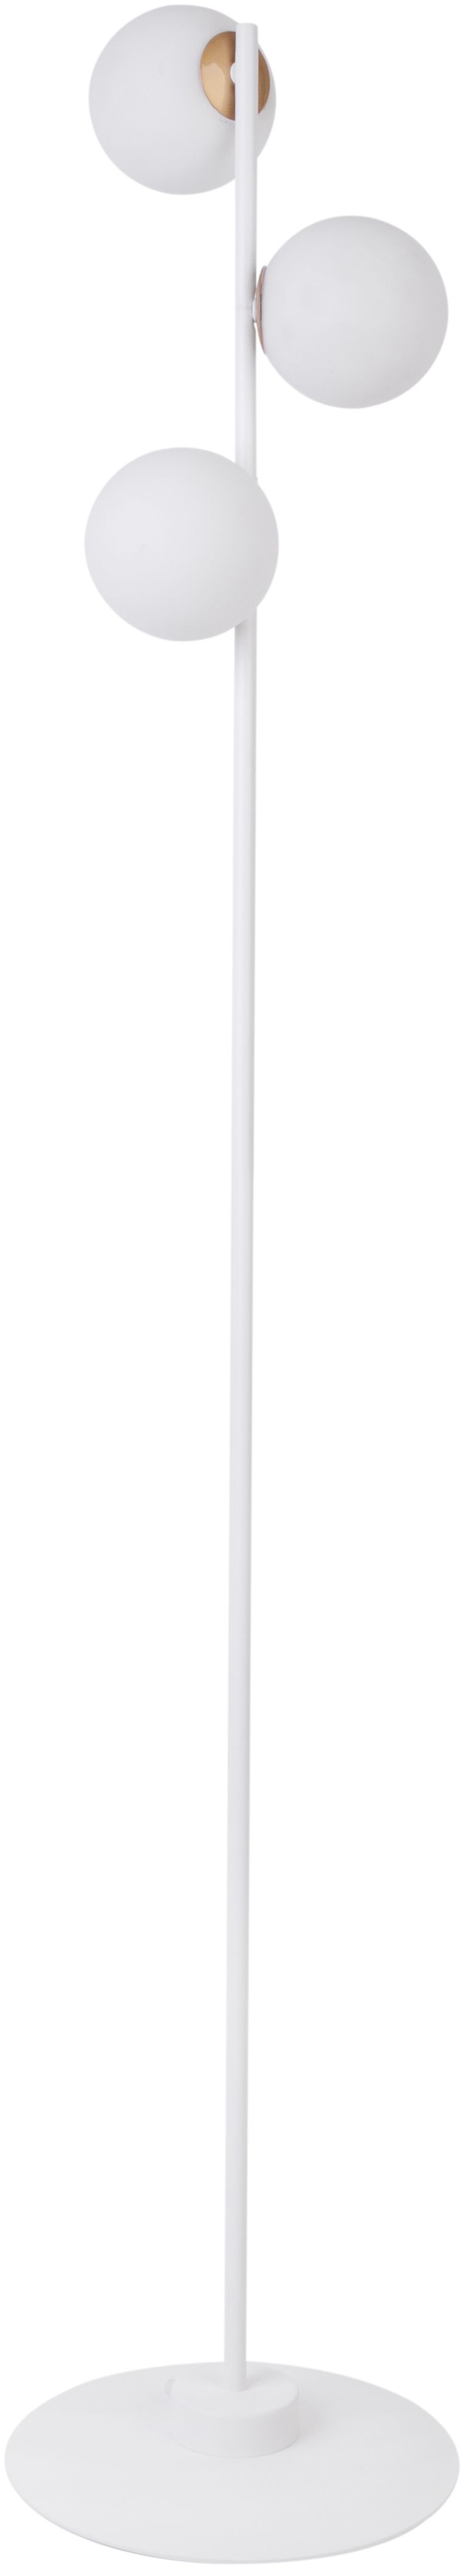 Stehlampe 3-flammig Metall Weiß Kugel Lesen G9 160 cm